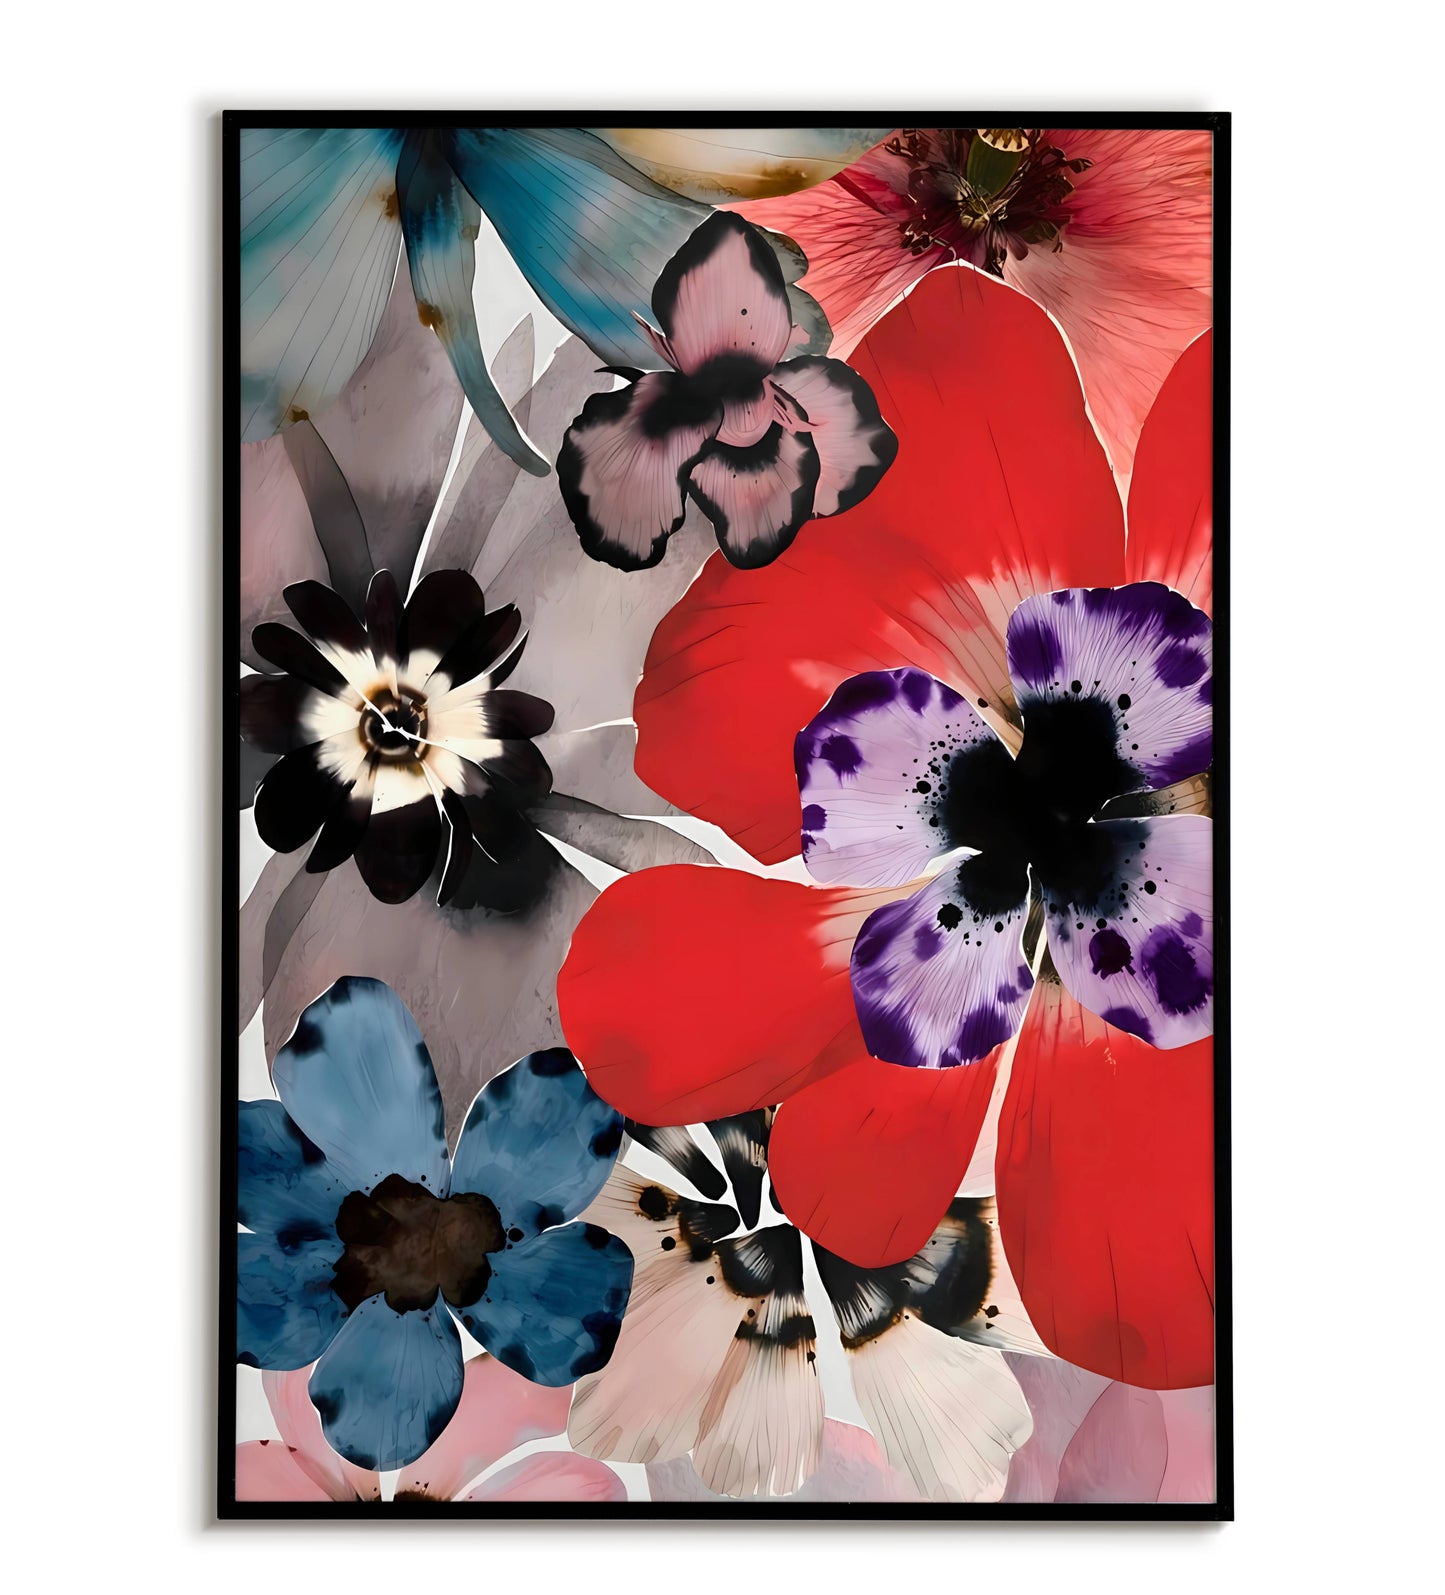 Floral Design poster. Beautiful and decorative floral artwork.